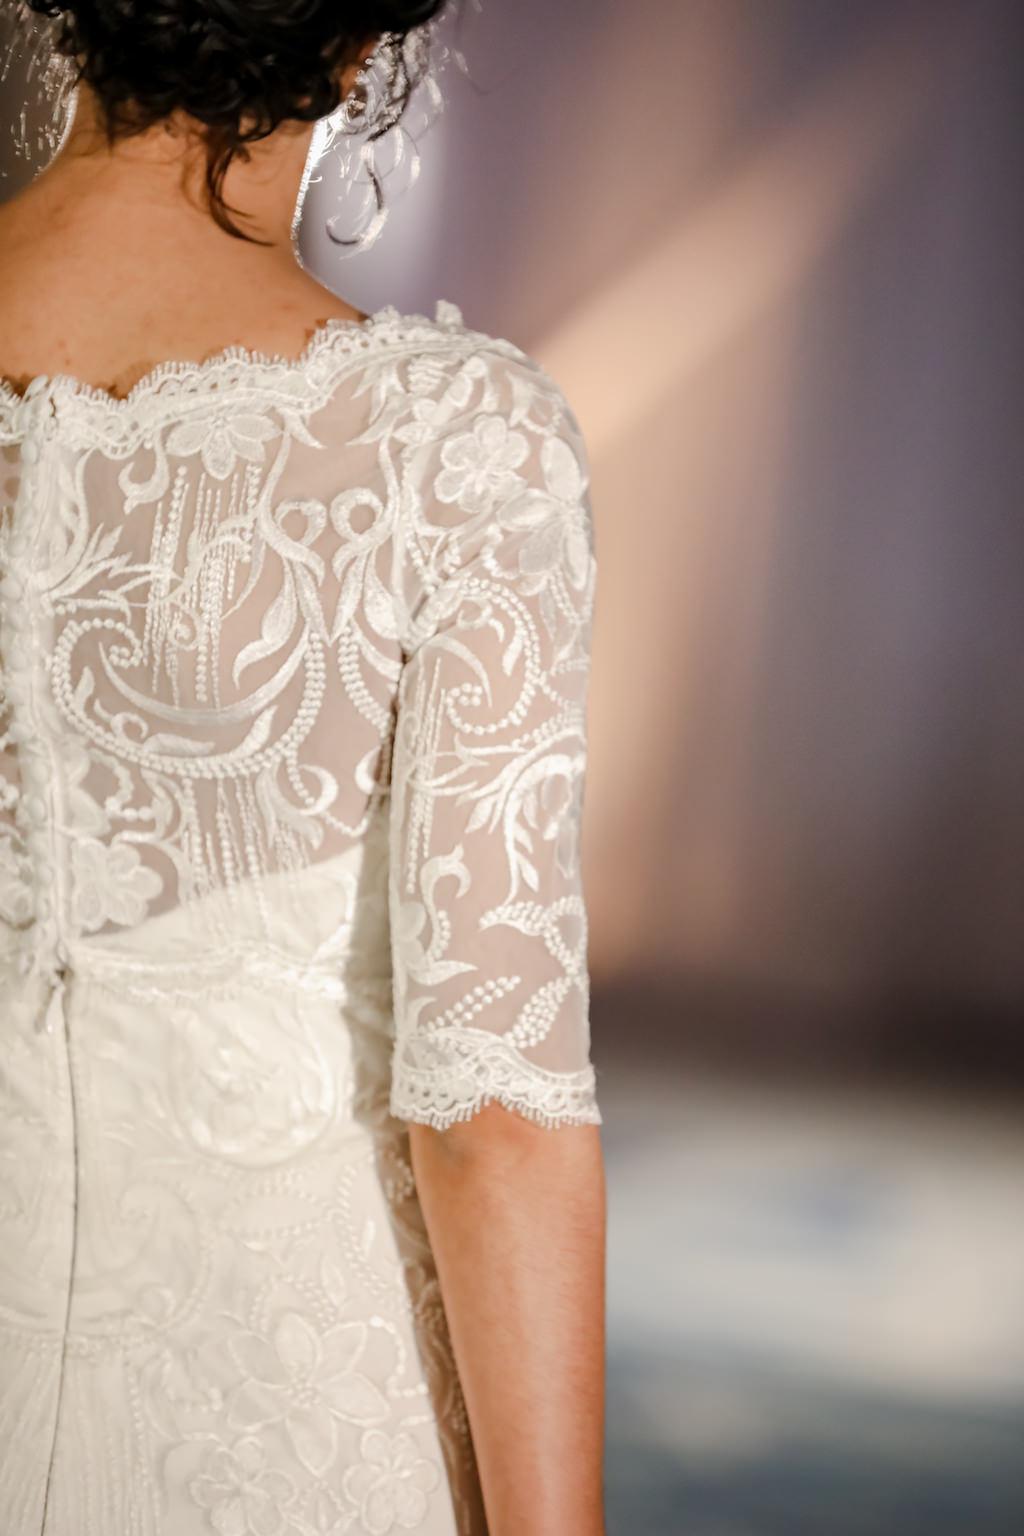 Illusion Lace Detailed Sleeves | Designer Matthew Christopher | Truly Forever Bridal | The Ritz Carlton Sarasota | Planner NK Weddings